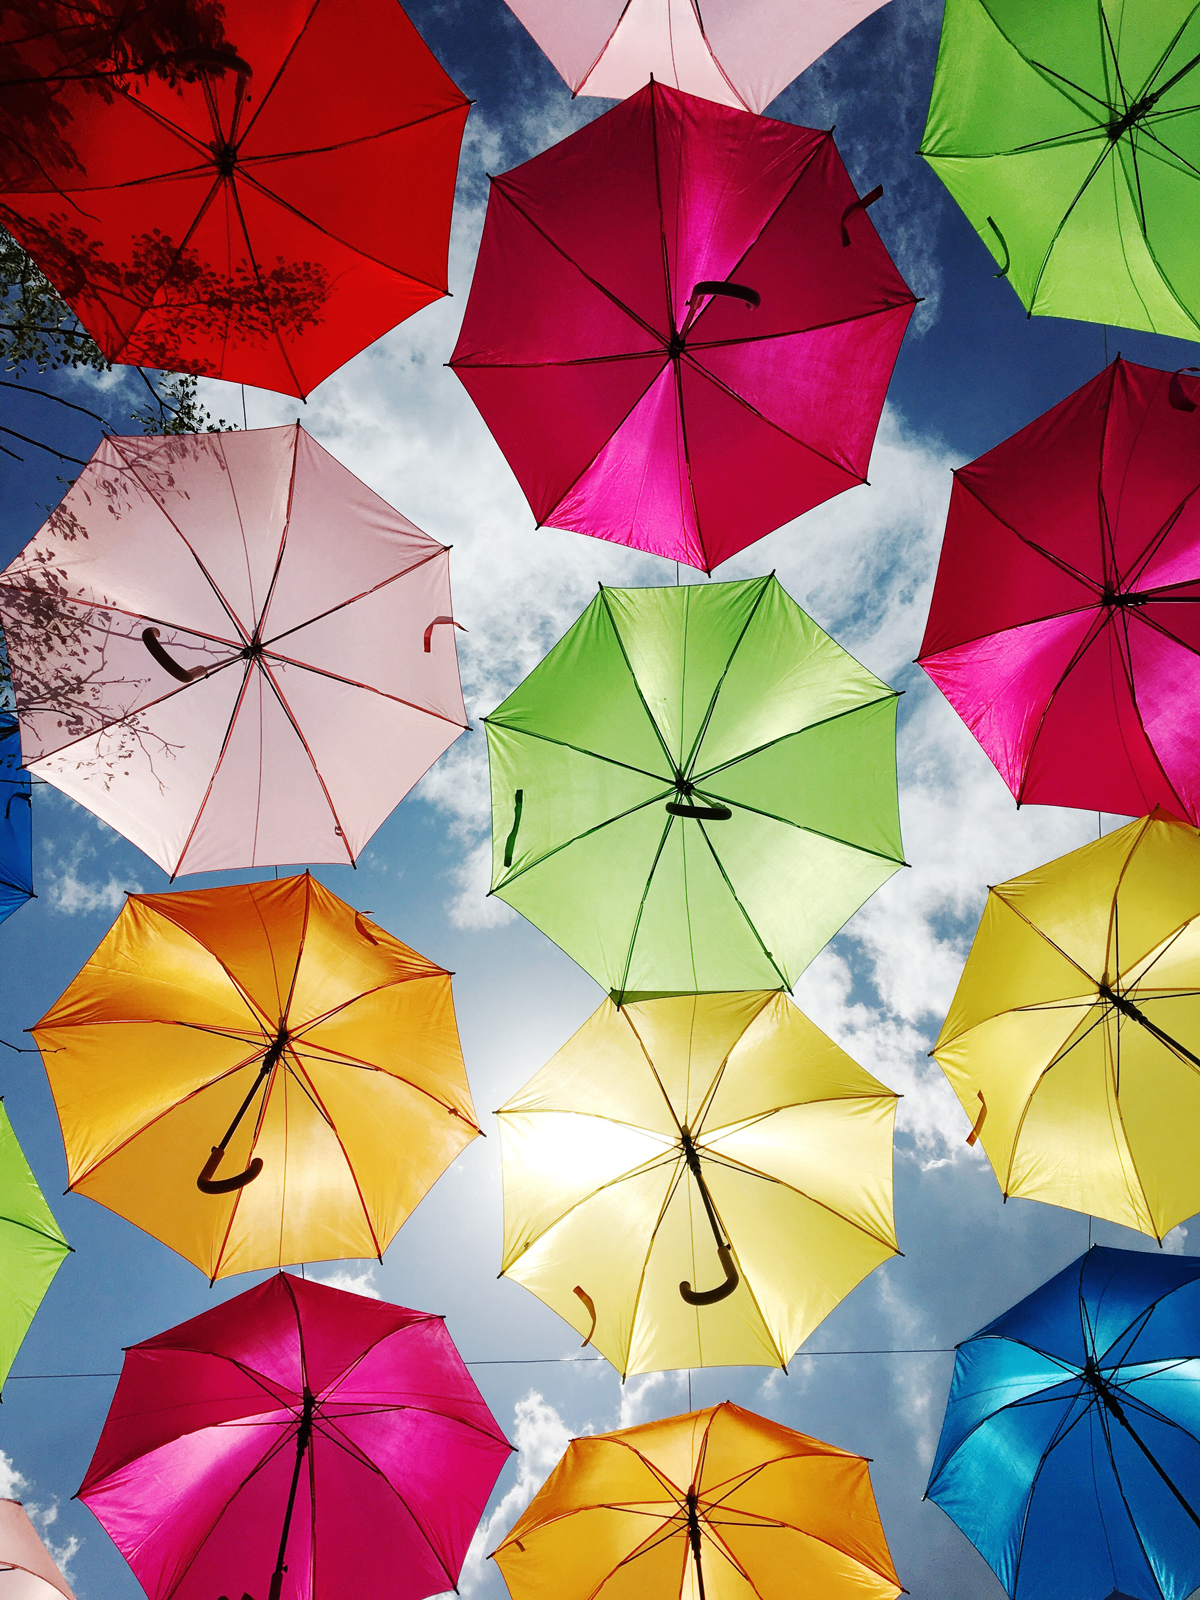 Miami Umbrella Sky Project - Instagram Hot Spot. Add to your bucket list when visiting Miami, Florida.